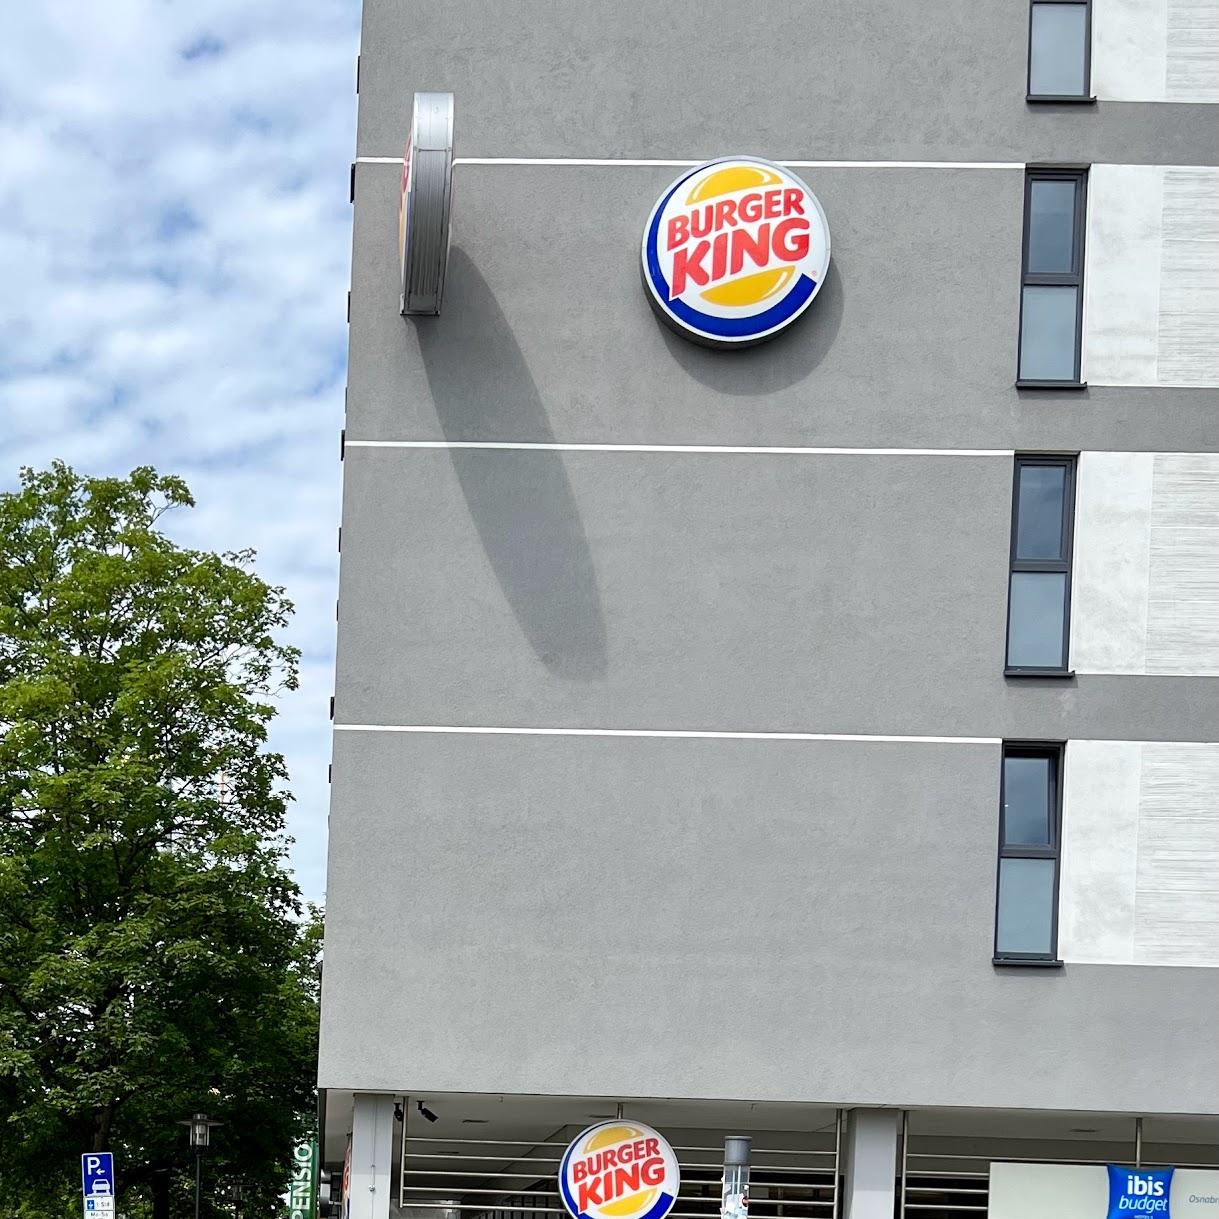 Restaurant "Burger King" in Osnabrück